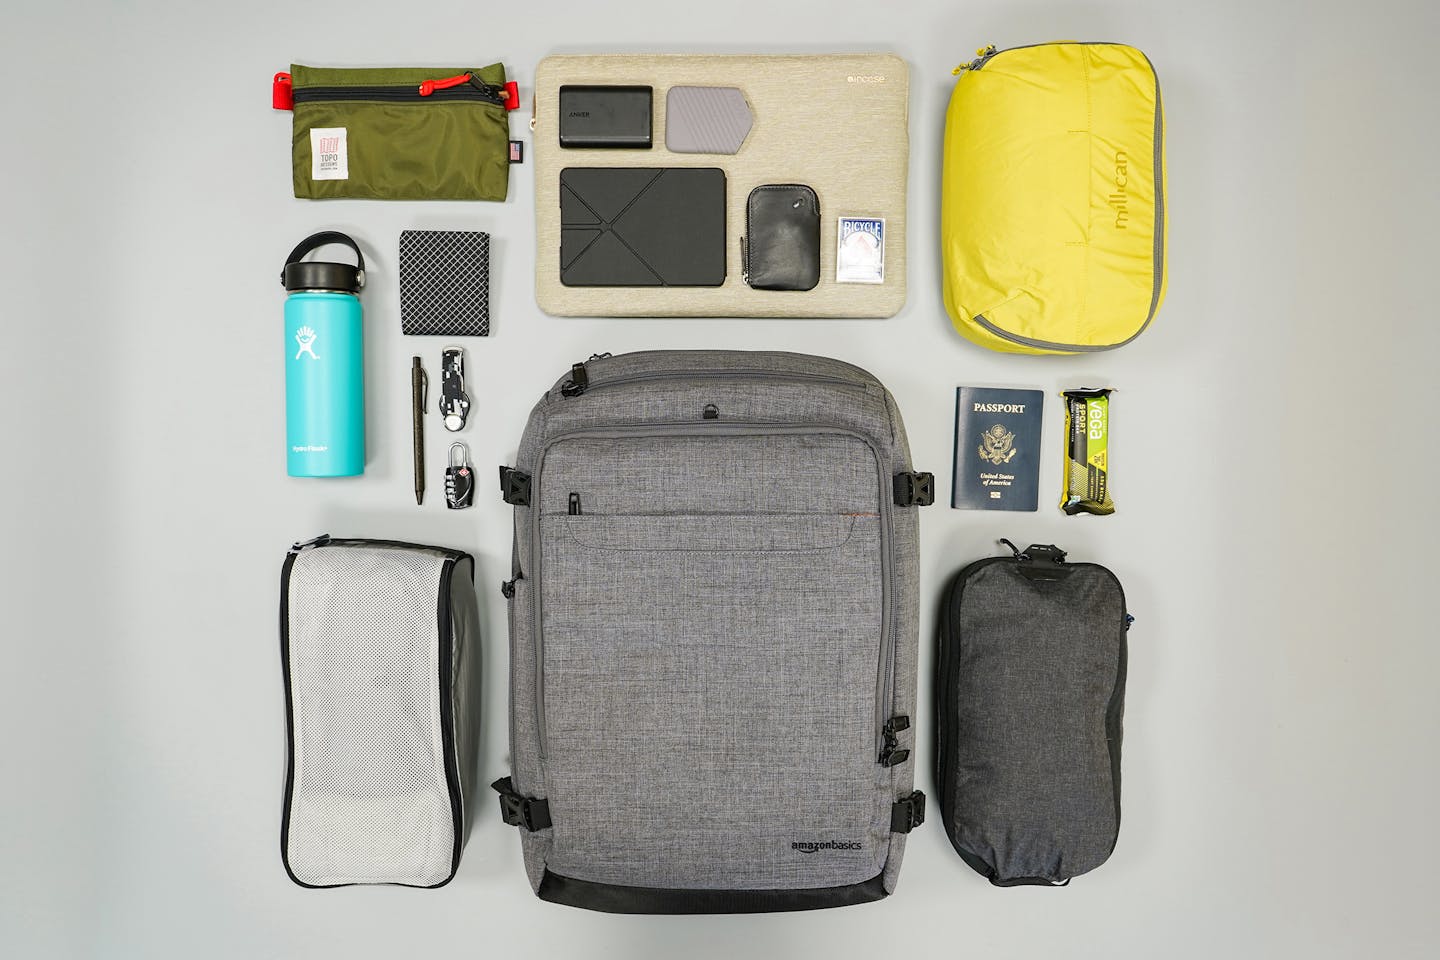 AmazonBasics Slim Travel Backpack Weekender Review Pack